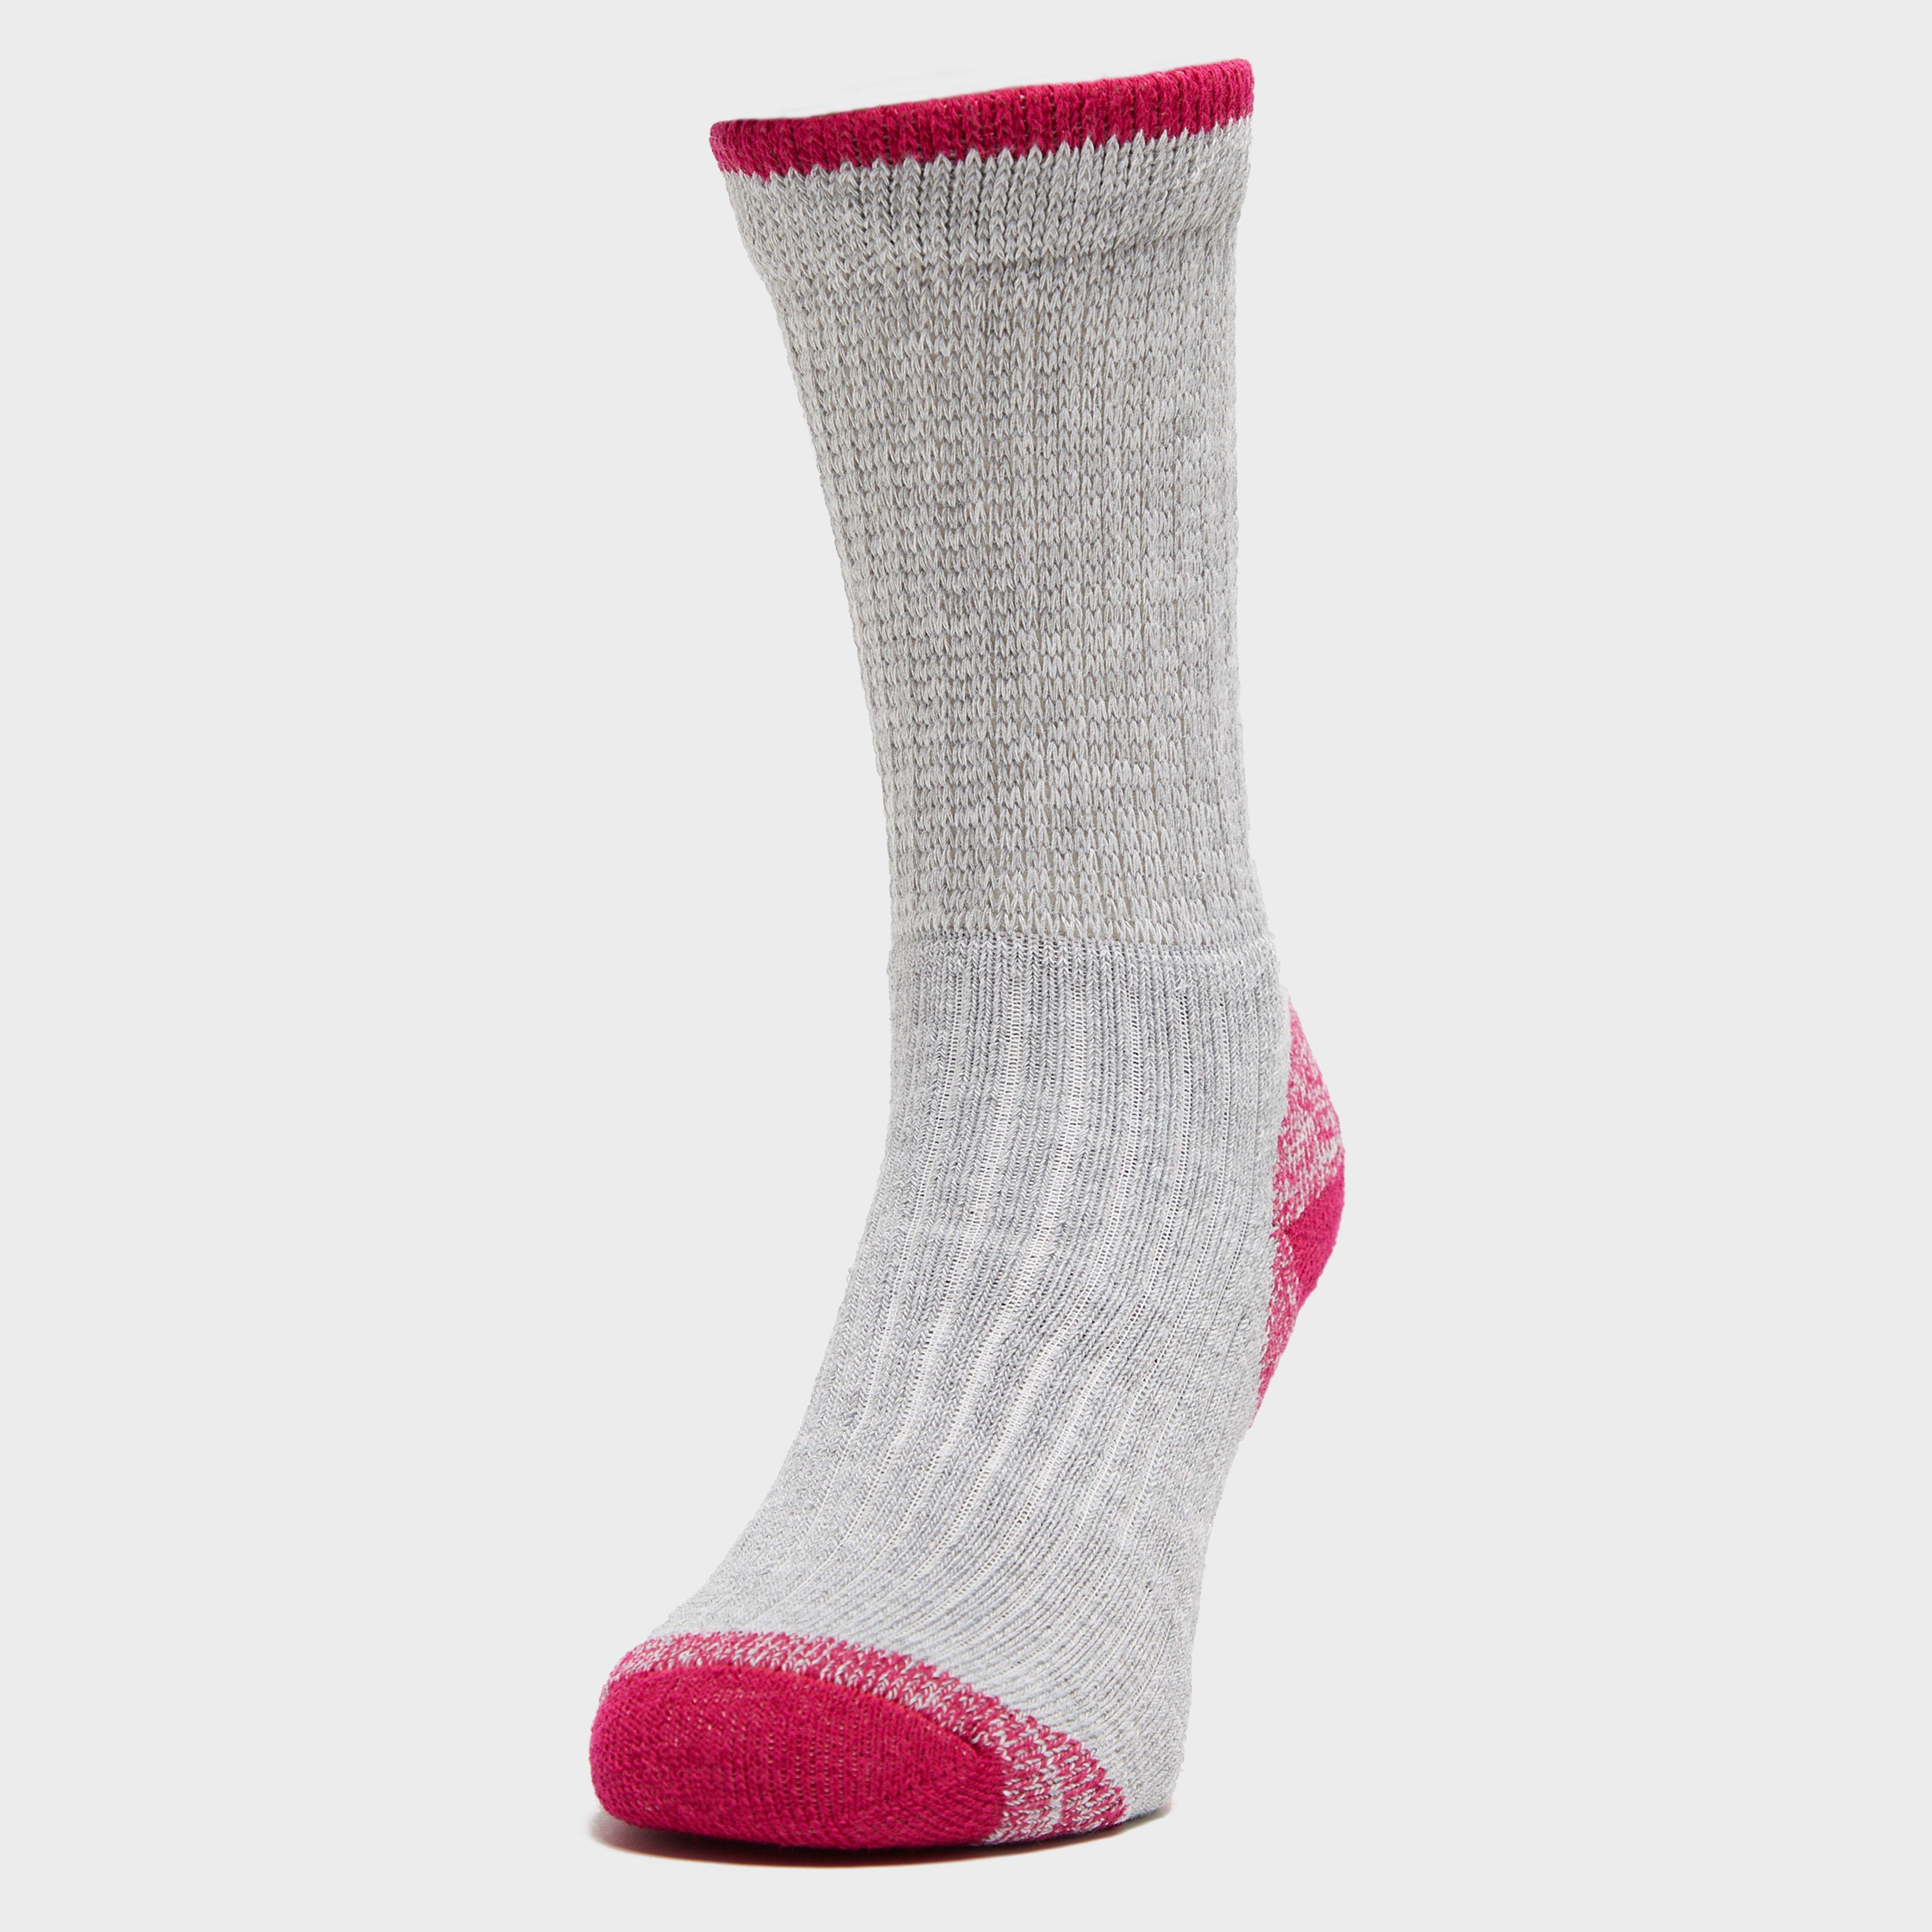 Brasher Women's Hiker Socks, Grey